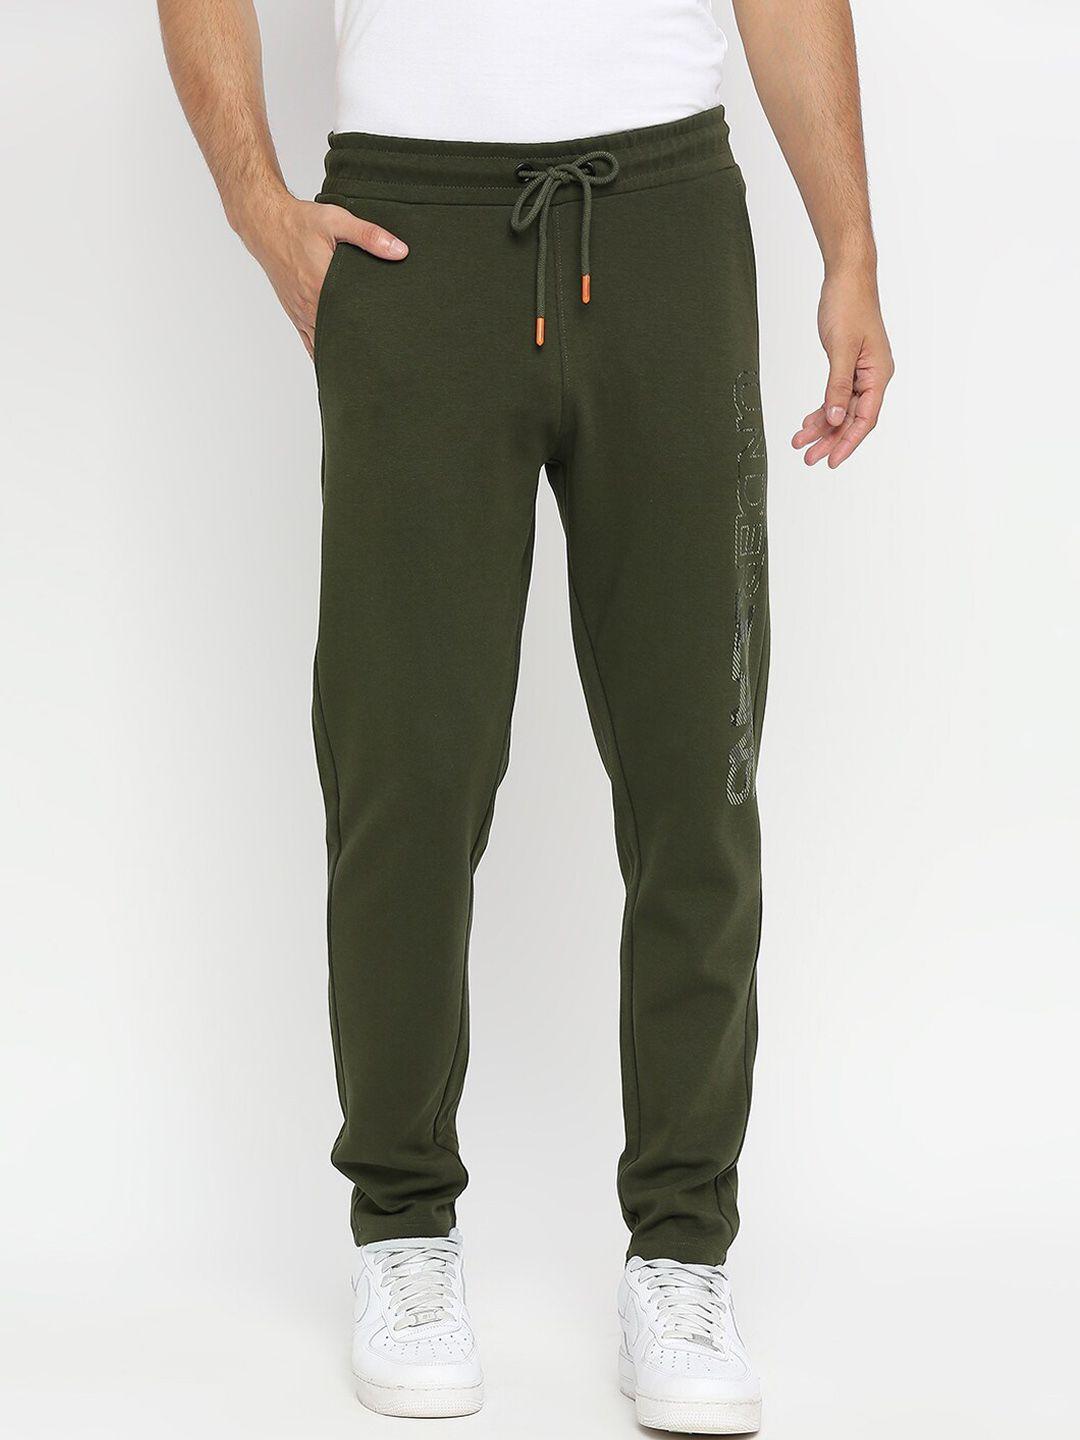 underjeans-by-spykar-men-olive-green-solid-track-pants